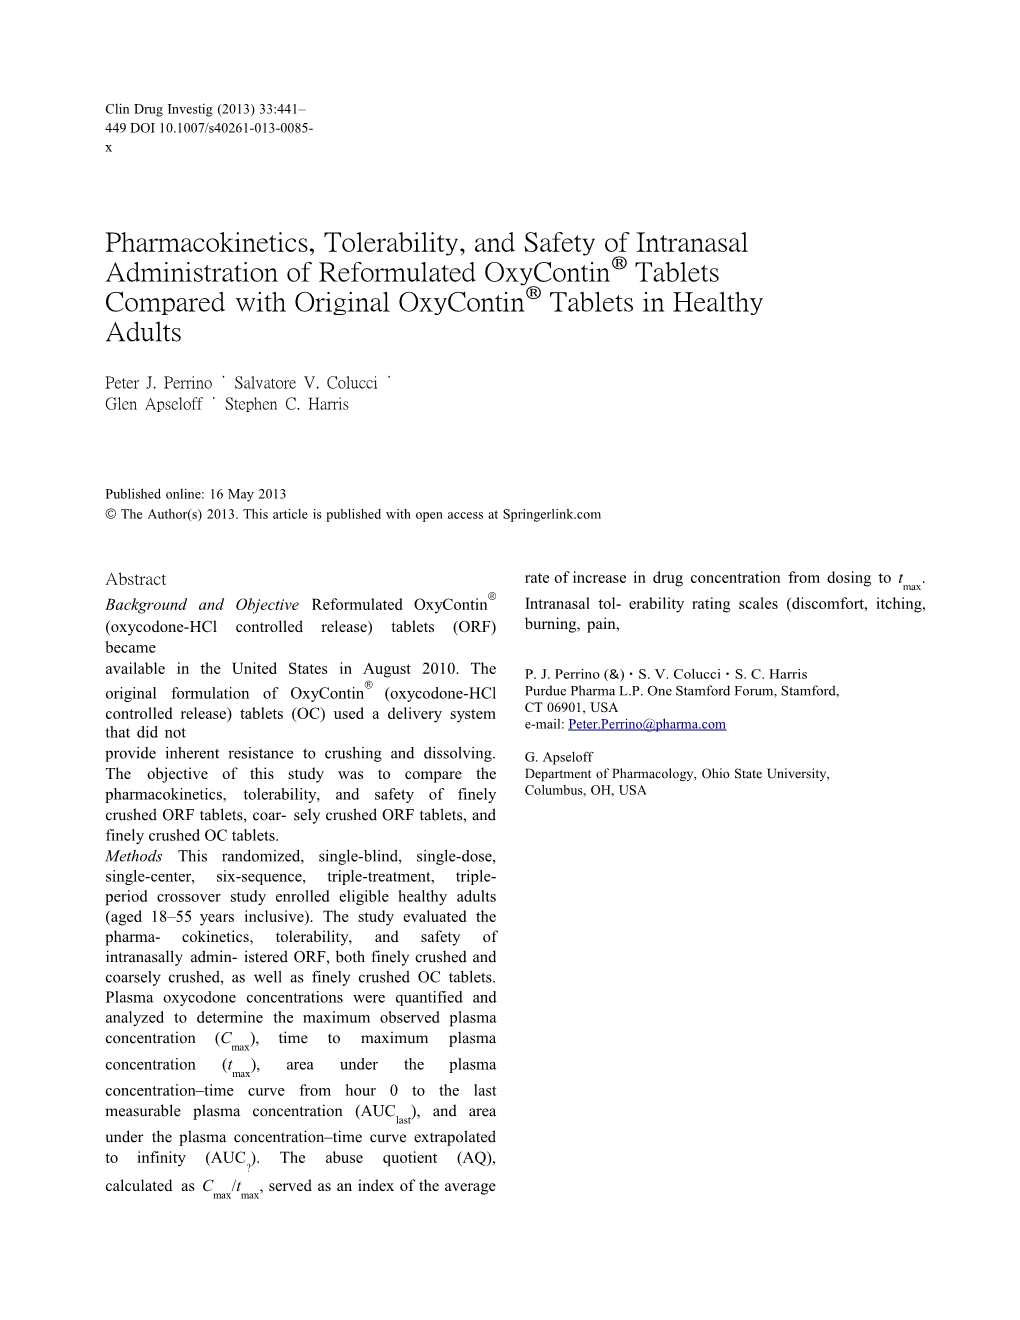 Pharmacokinetics,Tolerability, and Safetyofintranasaladministrationofreformulatedoxycontin